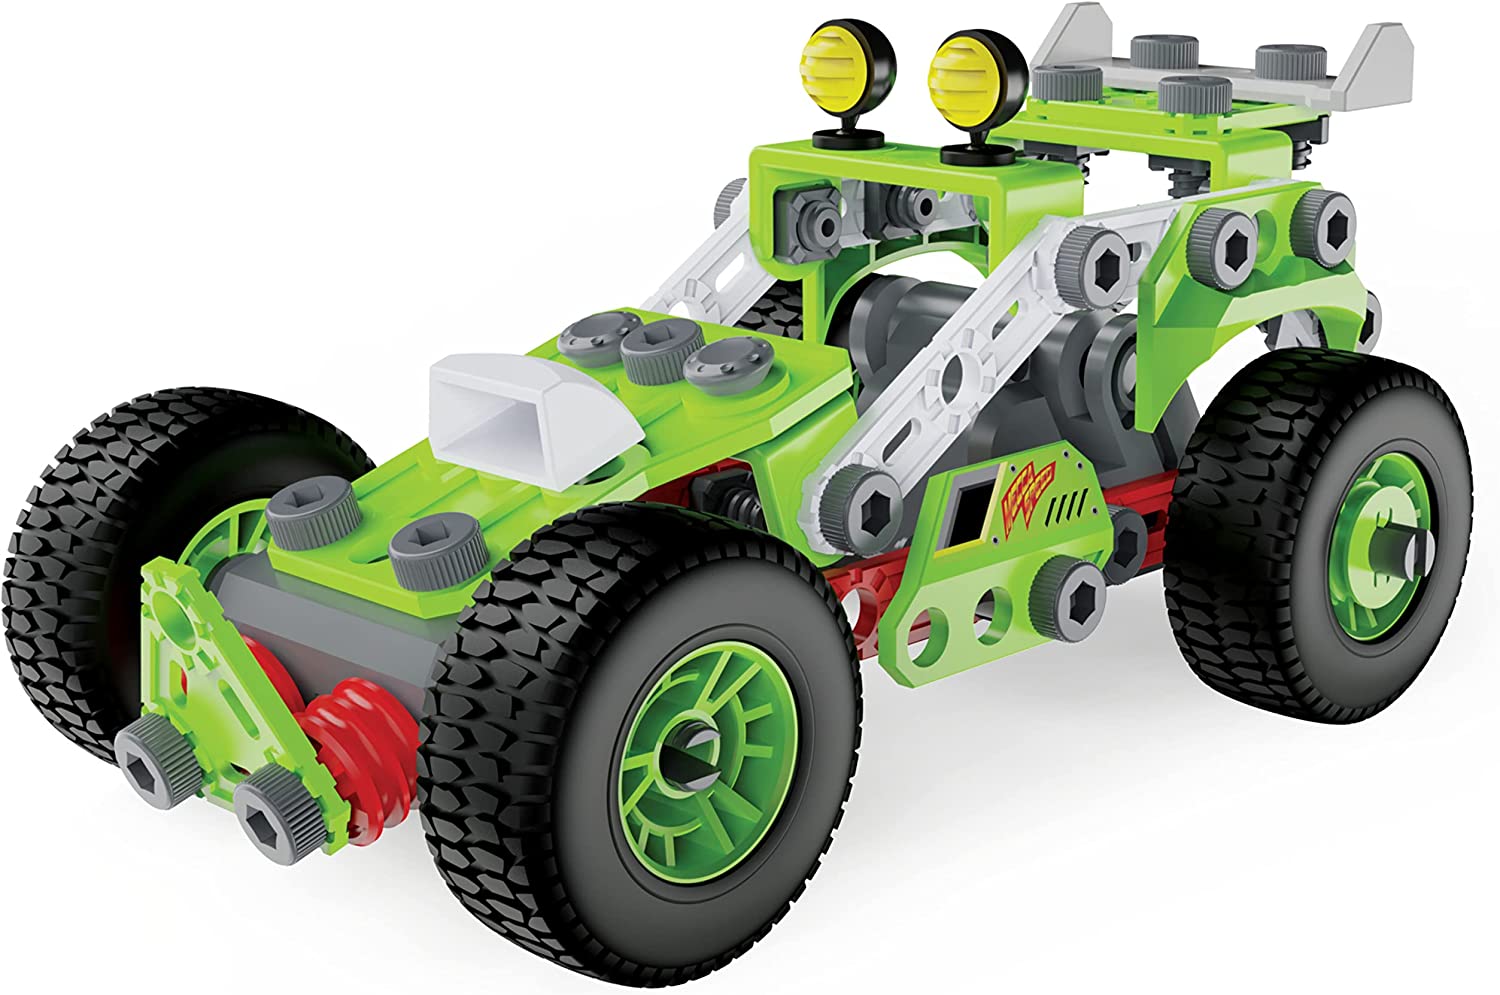 Tractor meccano Junior : tractors to be built